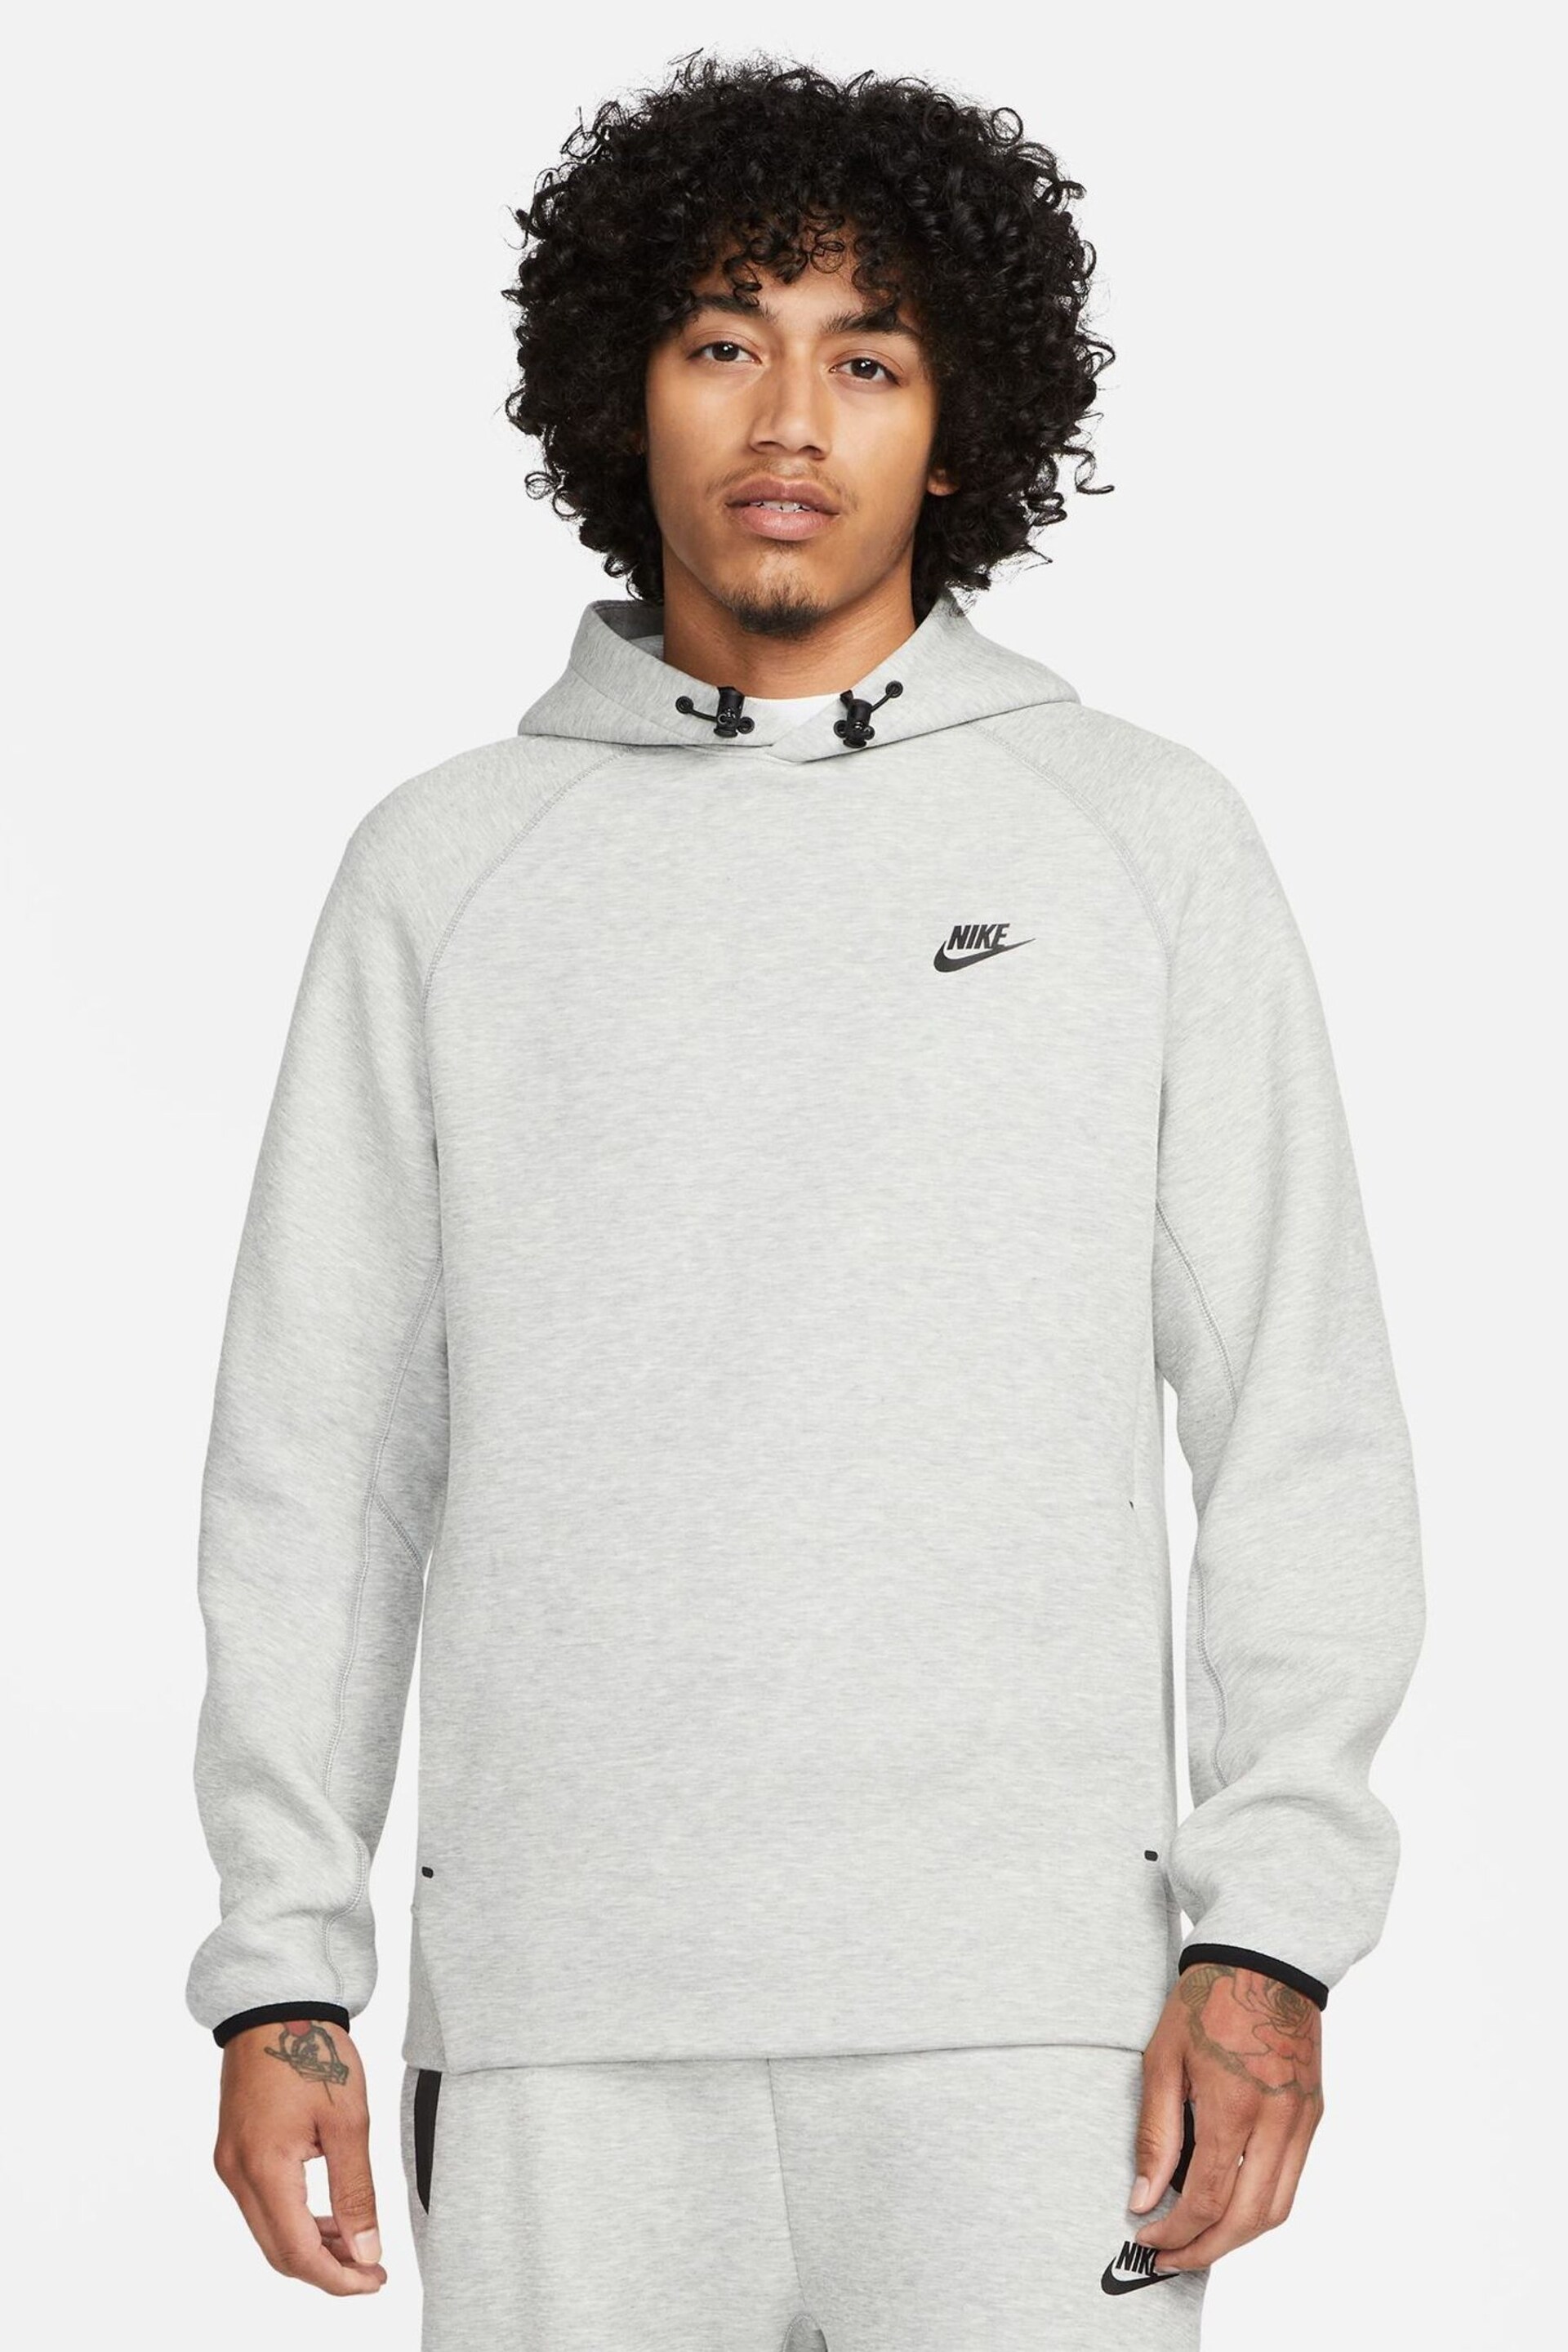 Nike Grey Tech Fleece Pullover Hoodie - Image 1 of 18